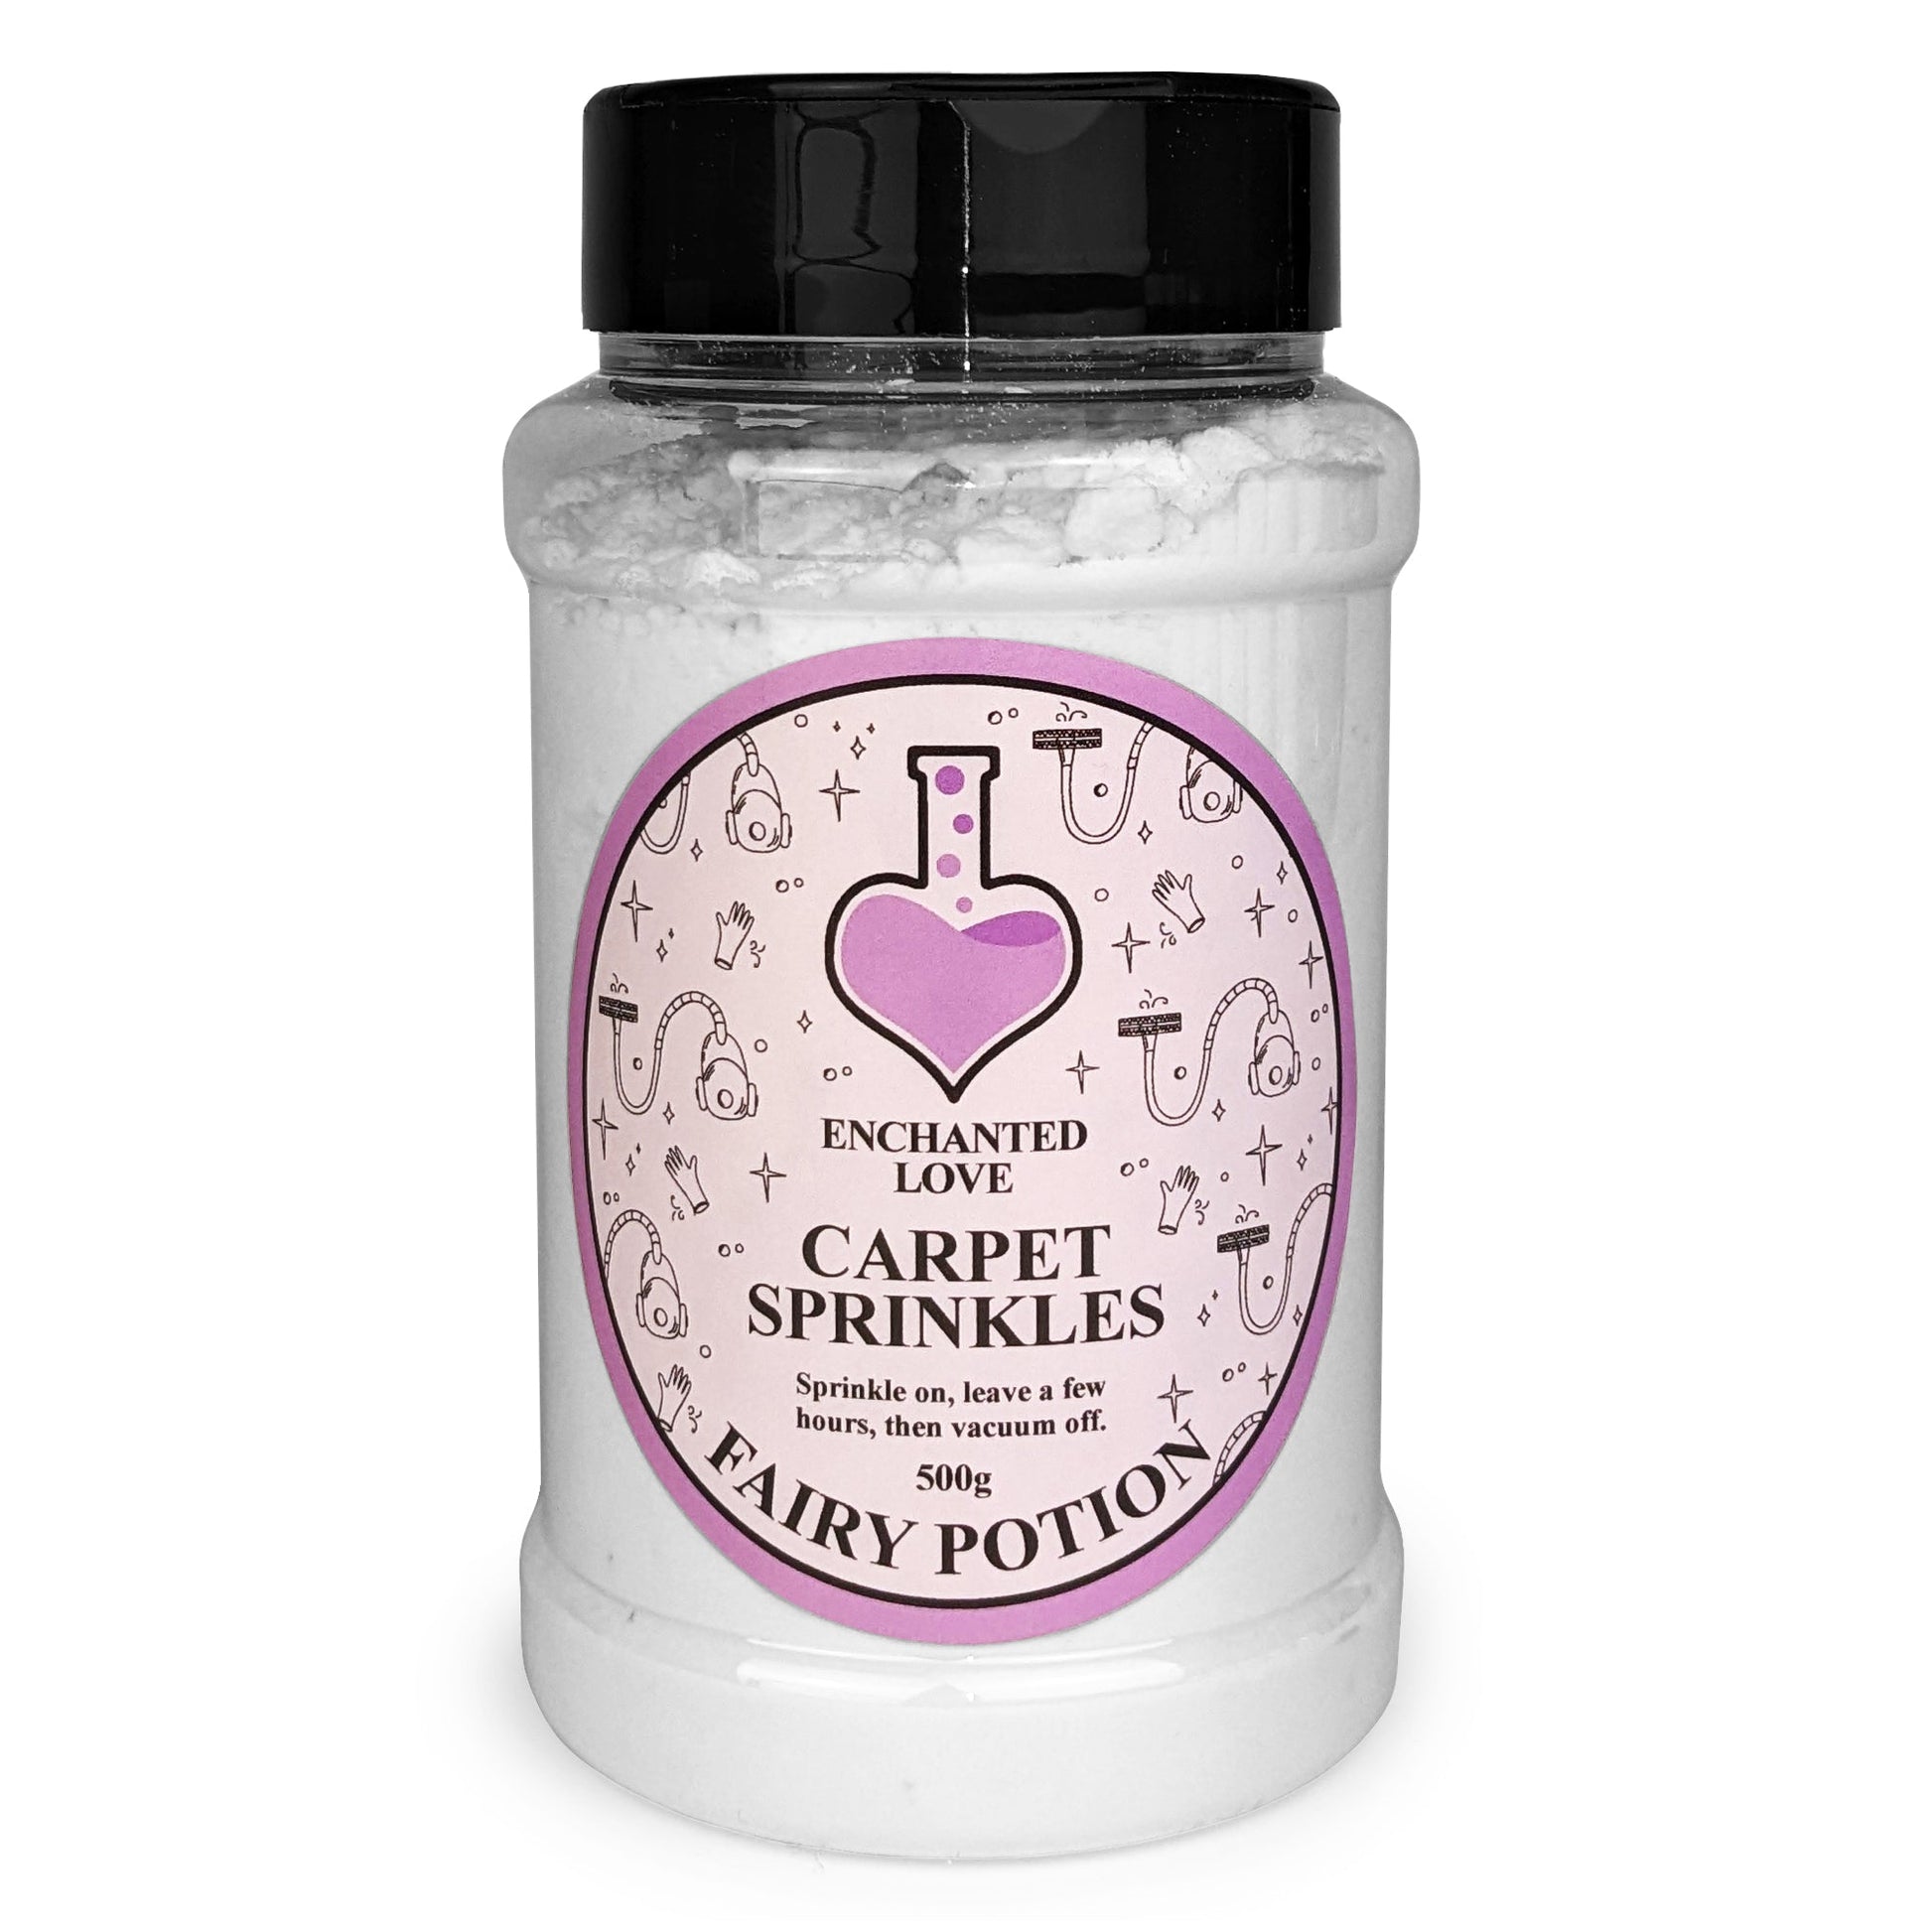 Fairy Potion Carpet Sprinkles Wholesale